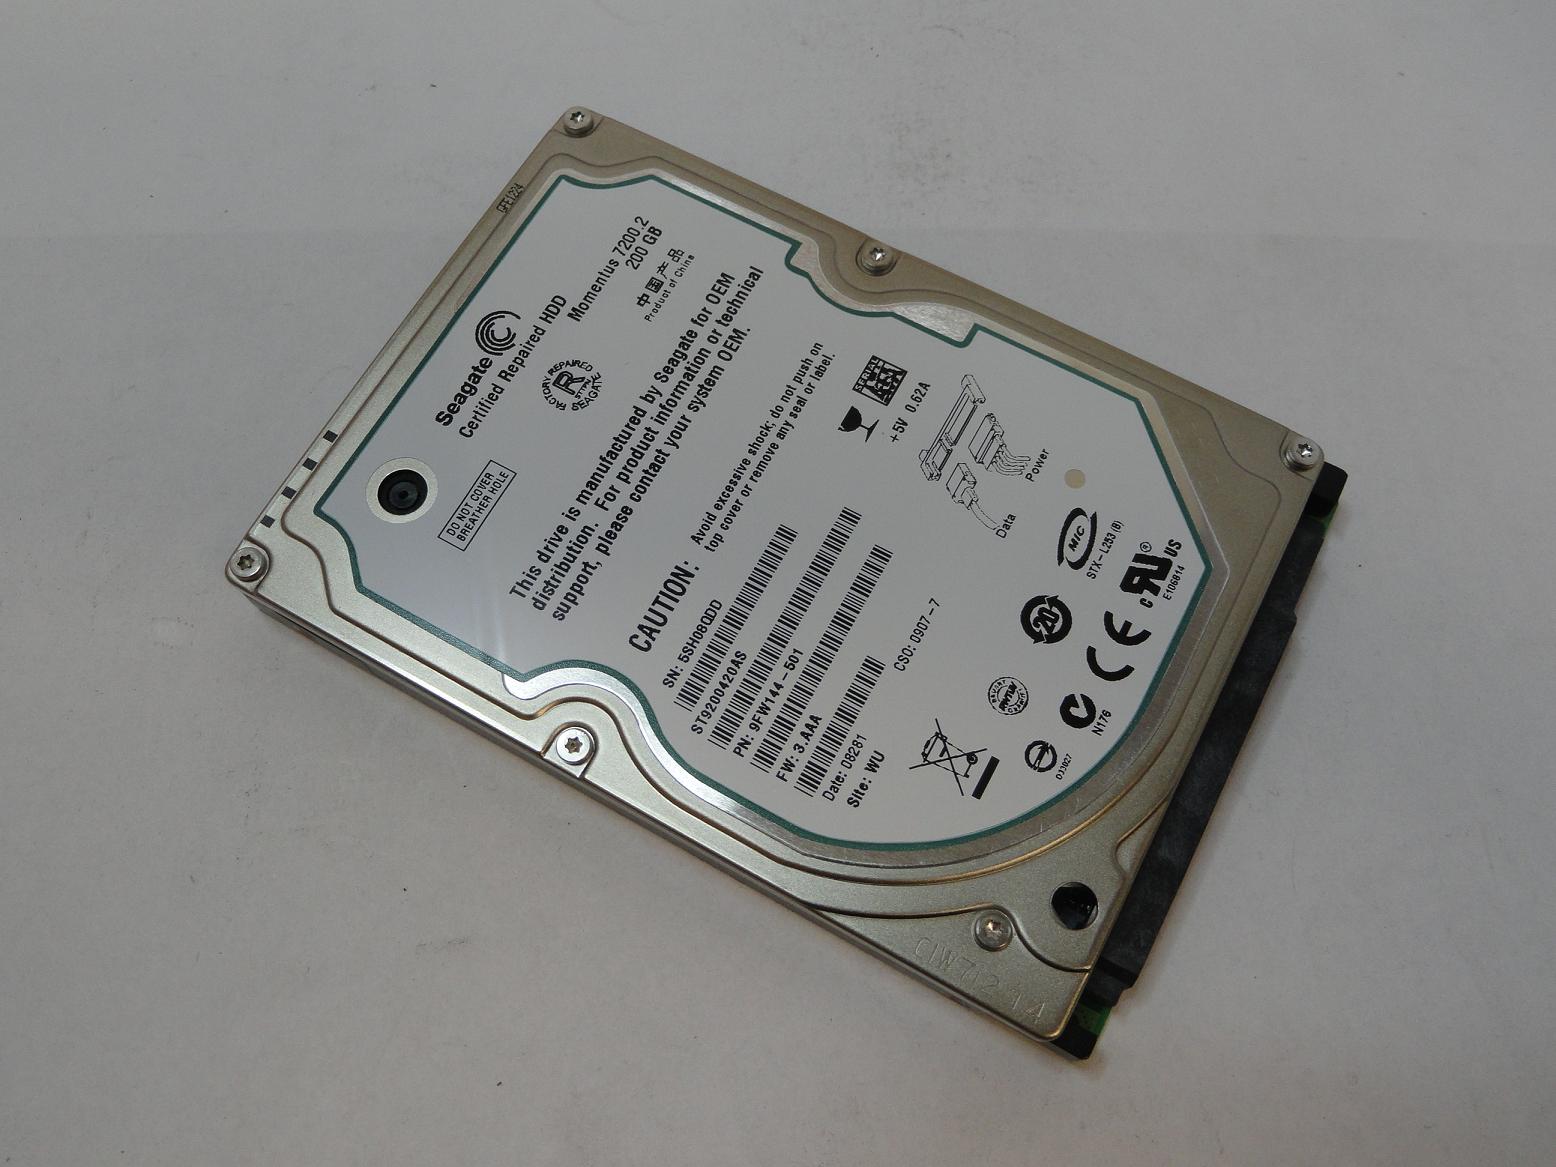 9FW144-501 - Seagate 200GB SATA 7200rpm 2.5in Certified Refurbished HDD - Refurbished